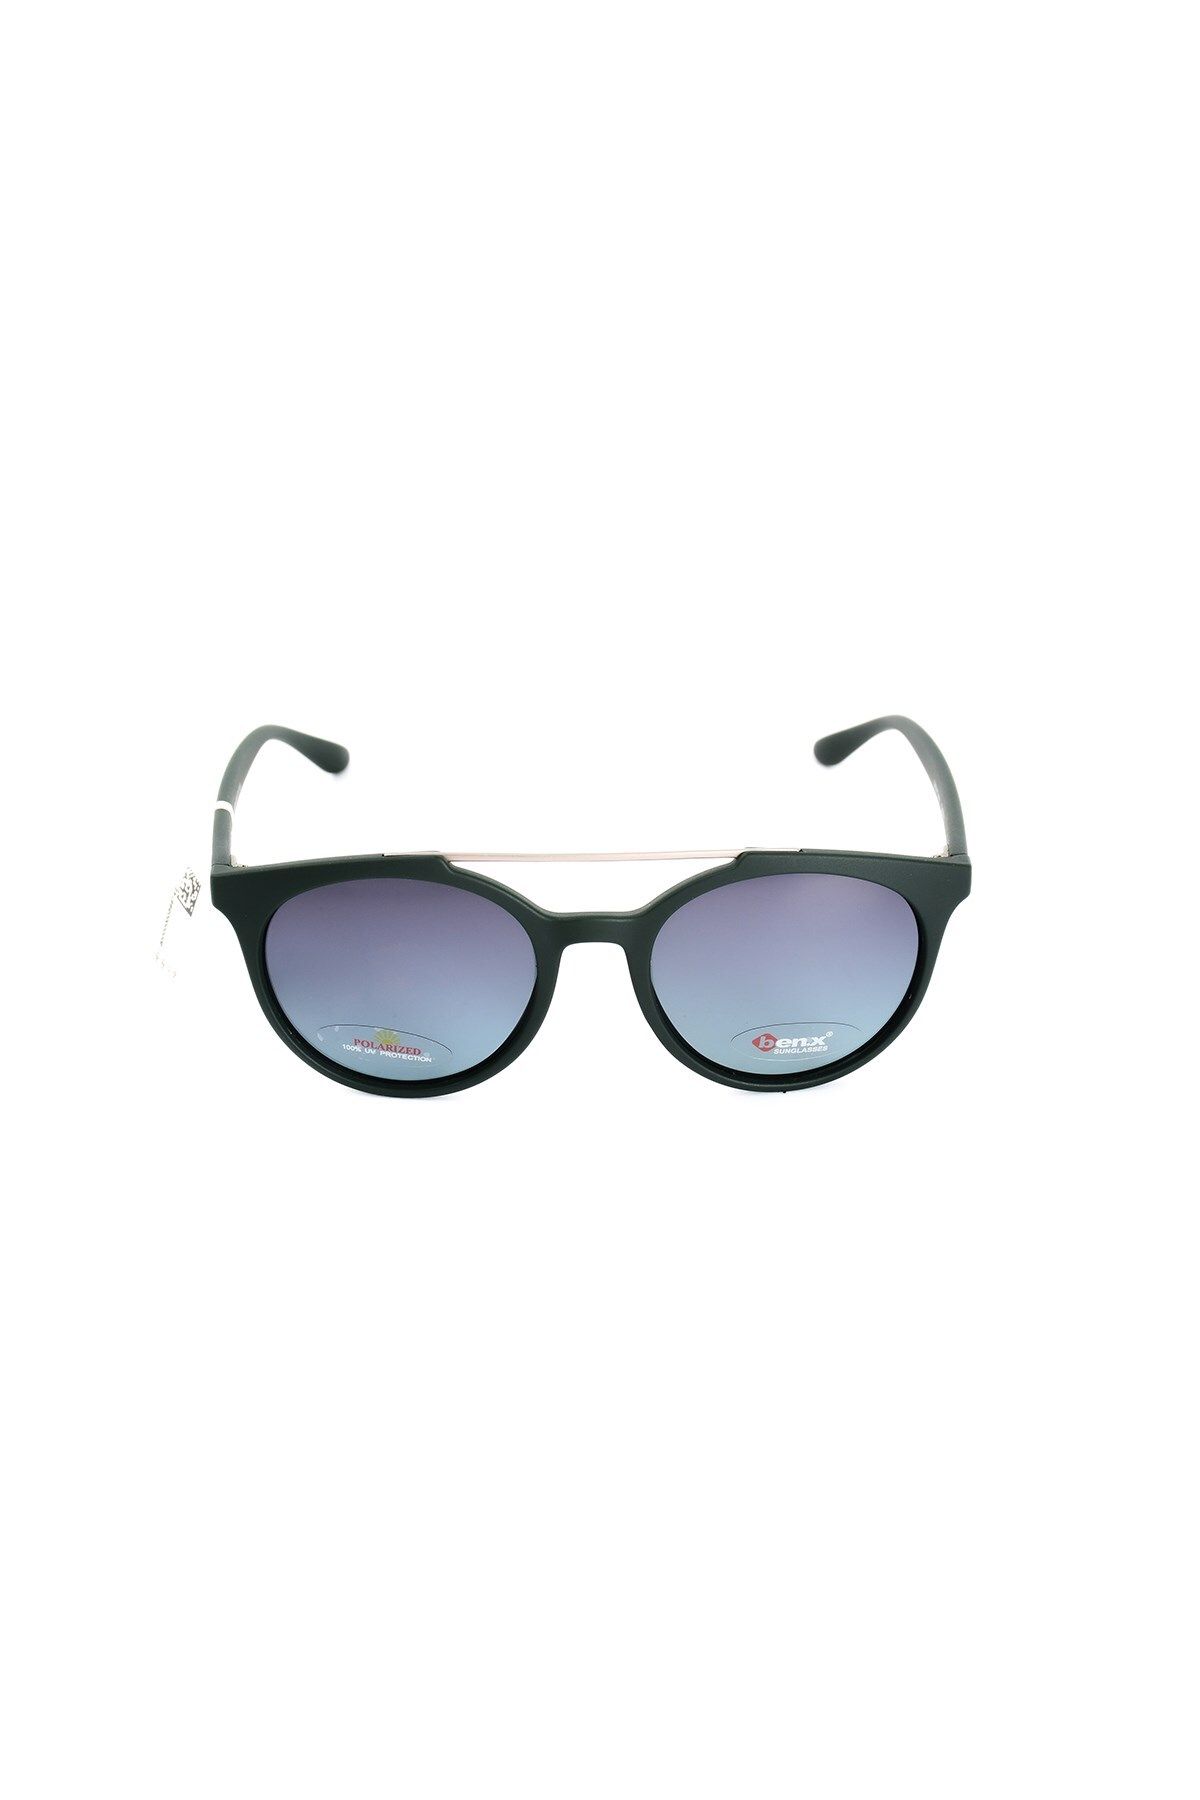 Benx Sunglasses Benx 9028 M116 49-20